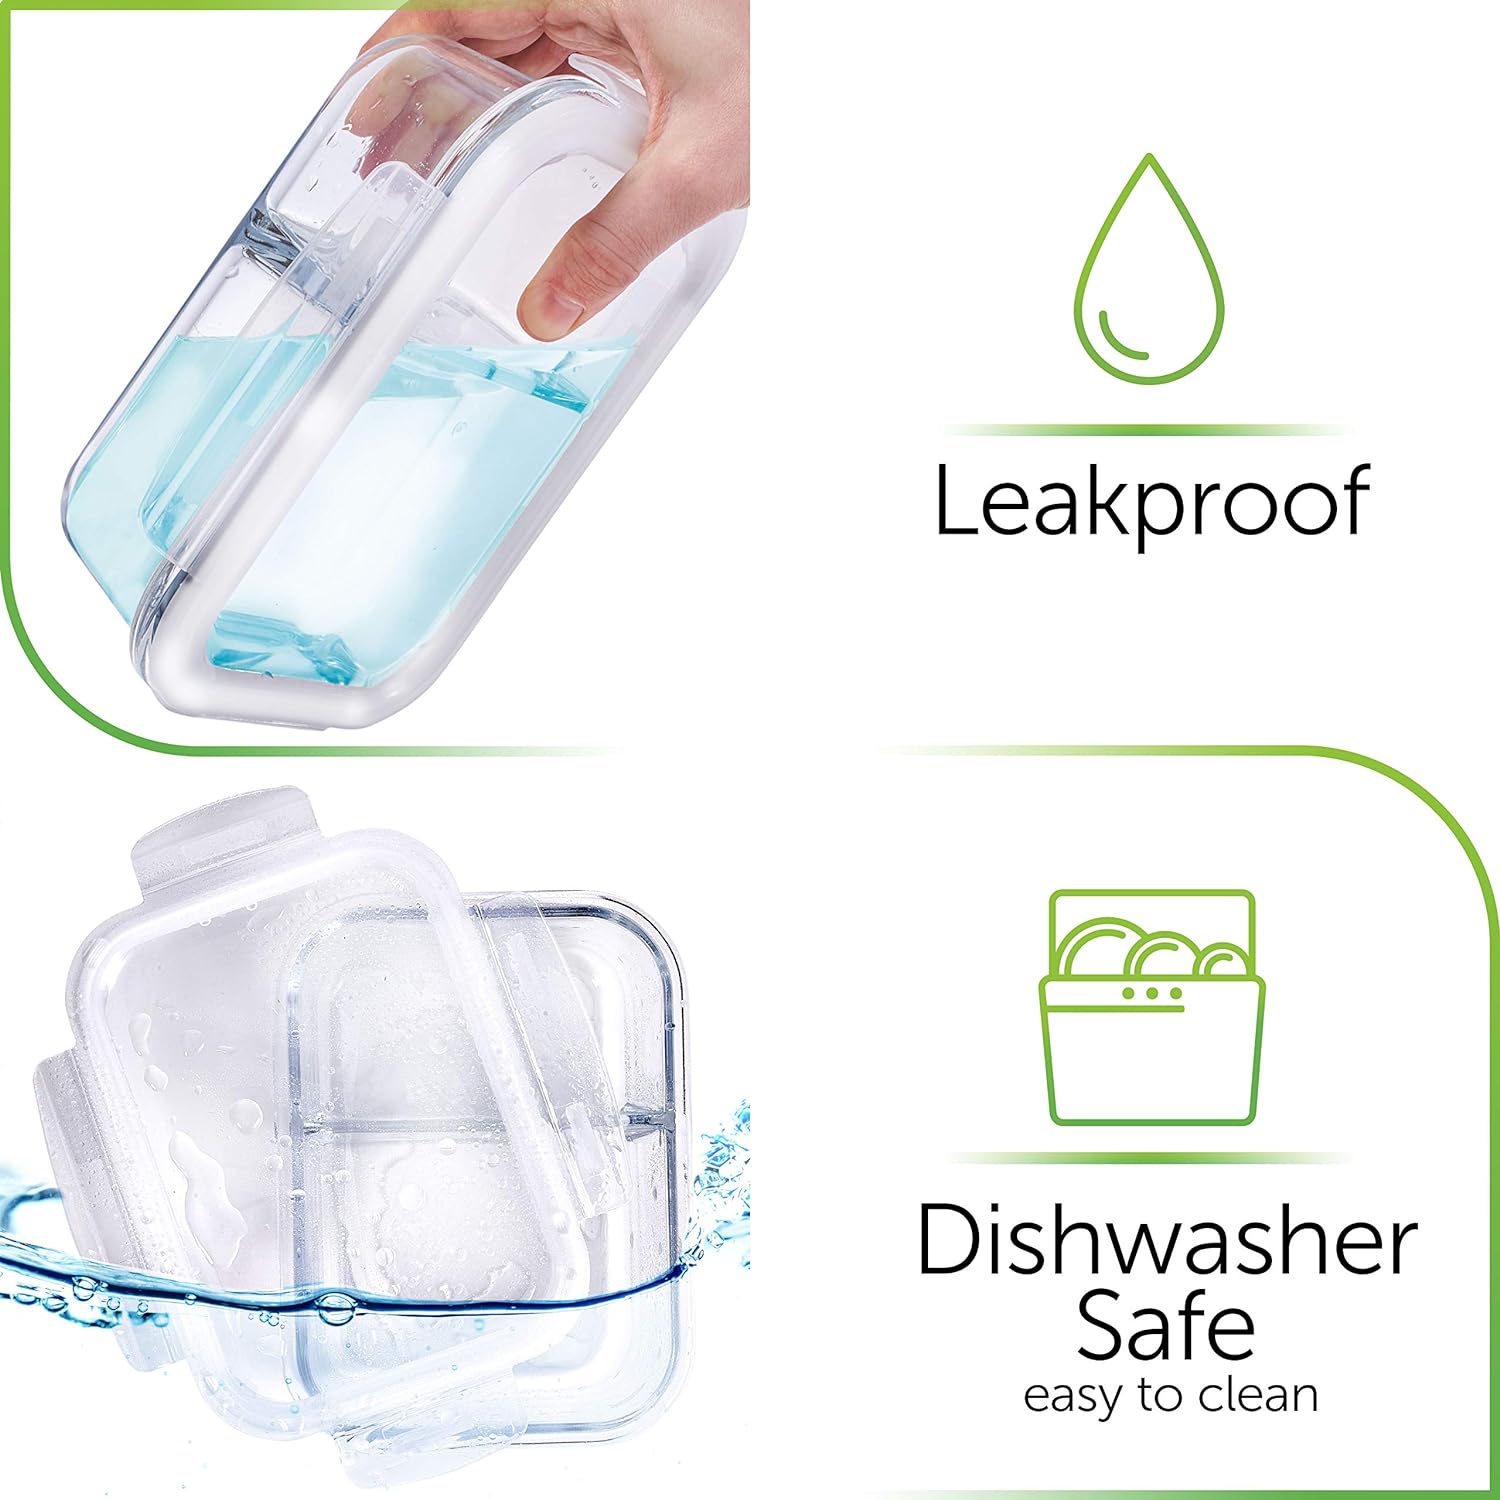 leakproof + dishwasher safe PrepNaturals Glass Storage Containers